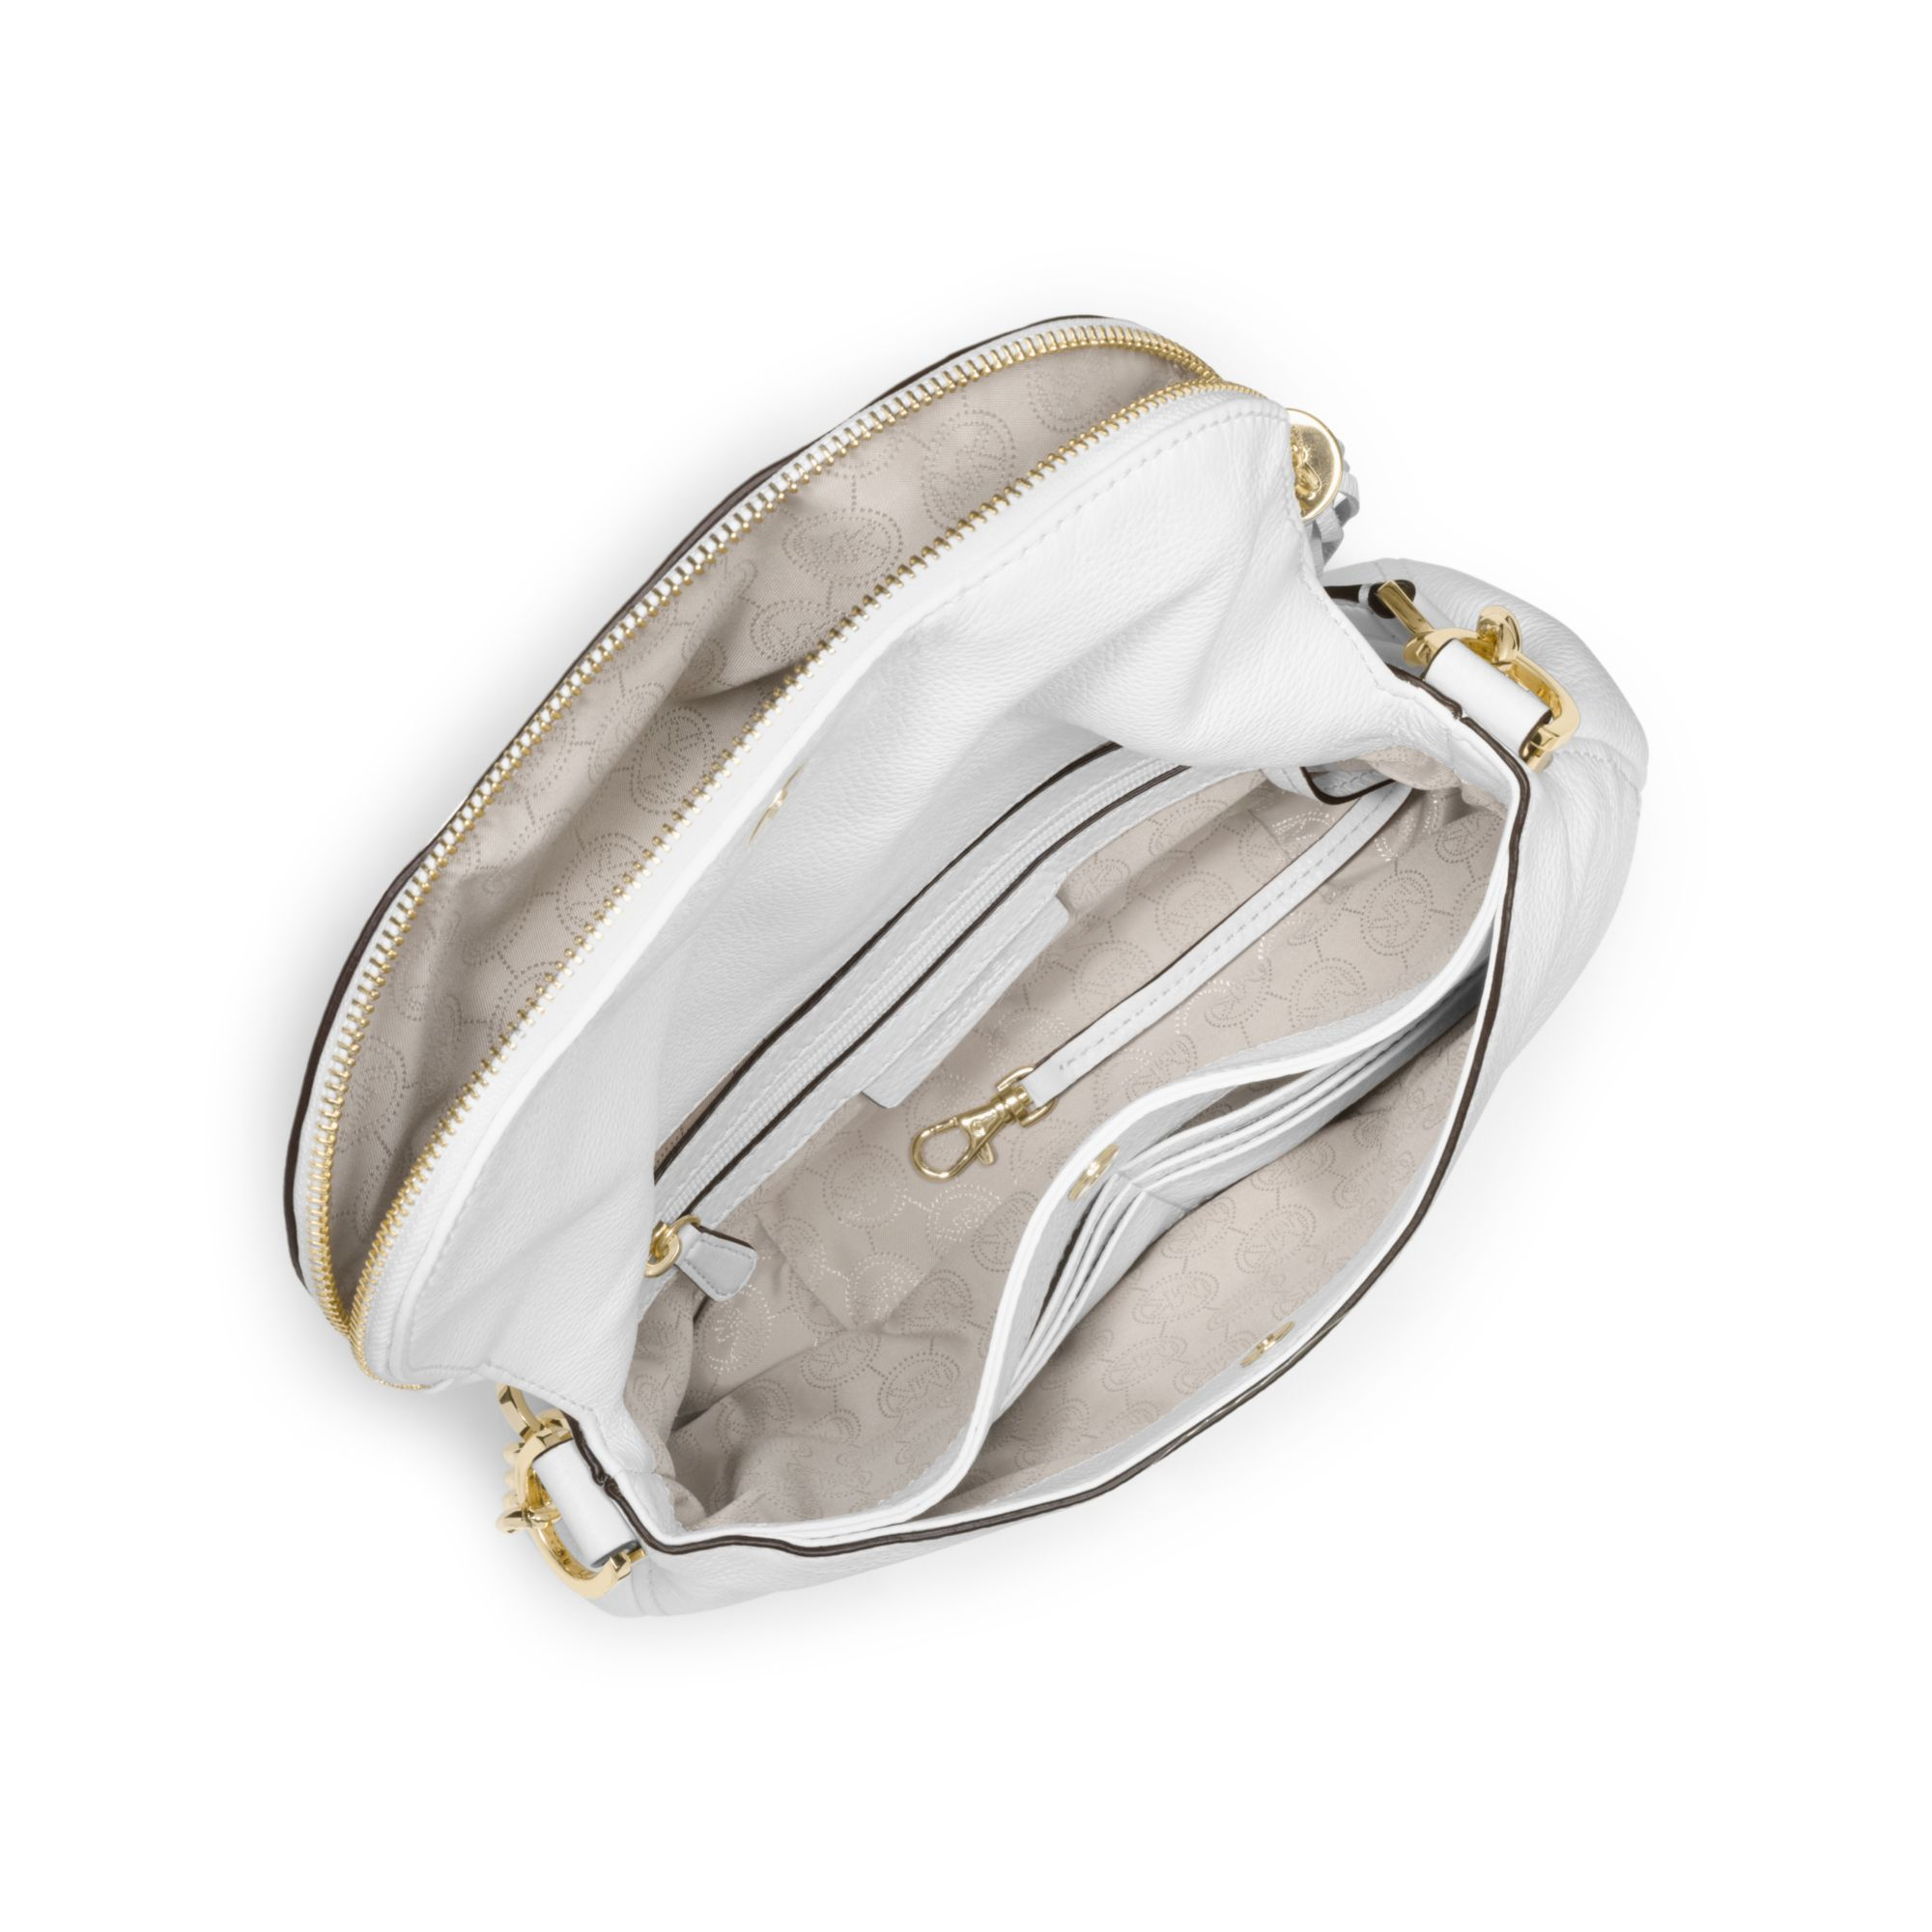 Lyst - Michael Kors Bedford Tassle Medium Leather Shoulder Bag in White